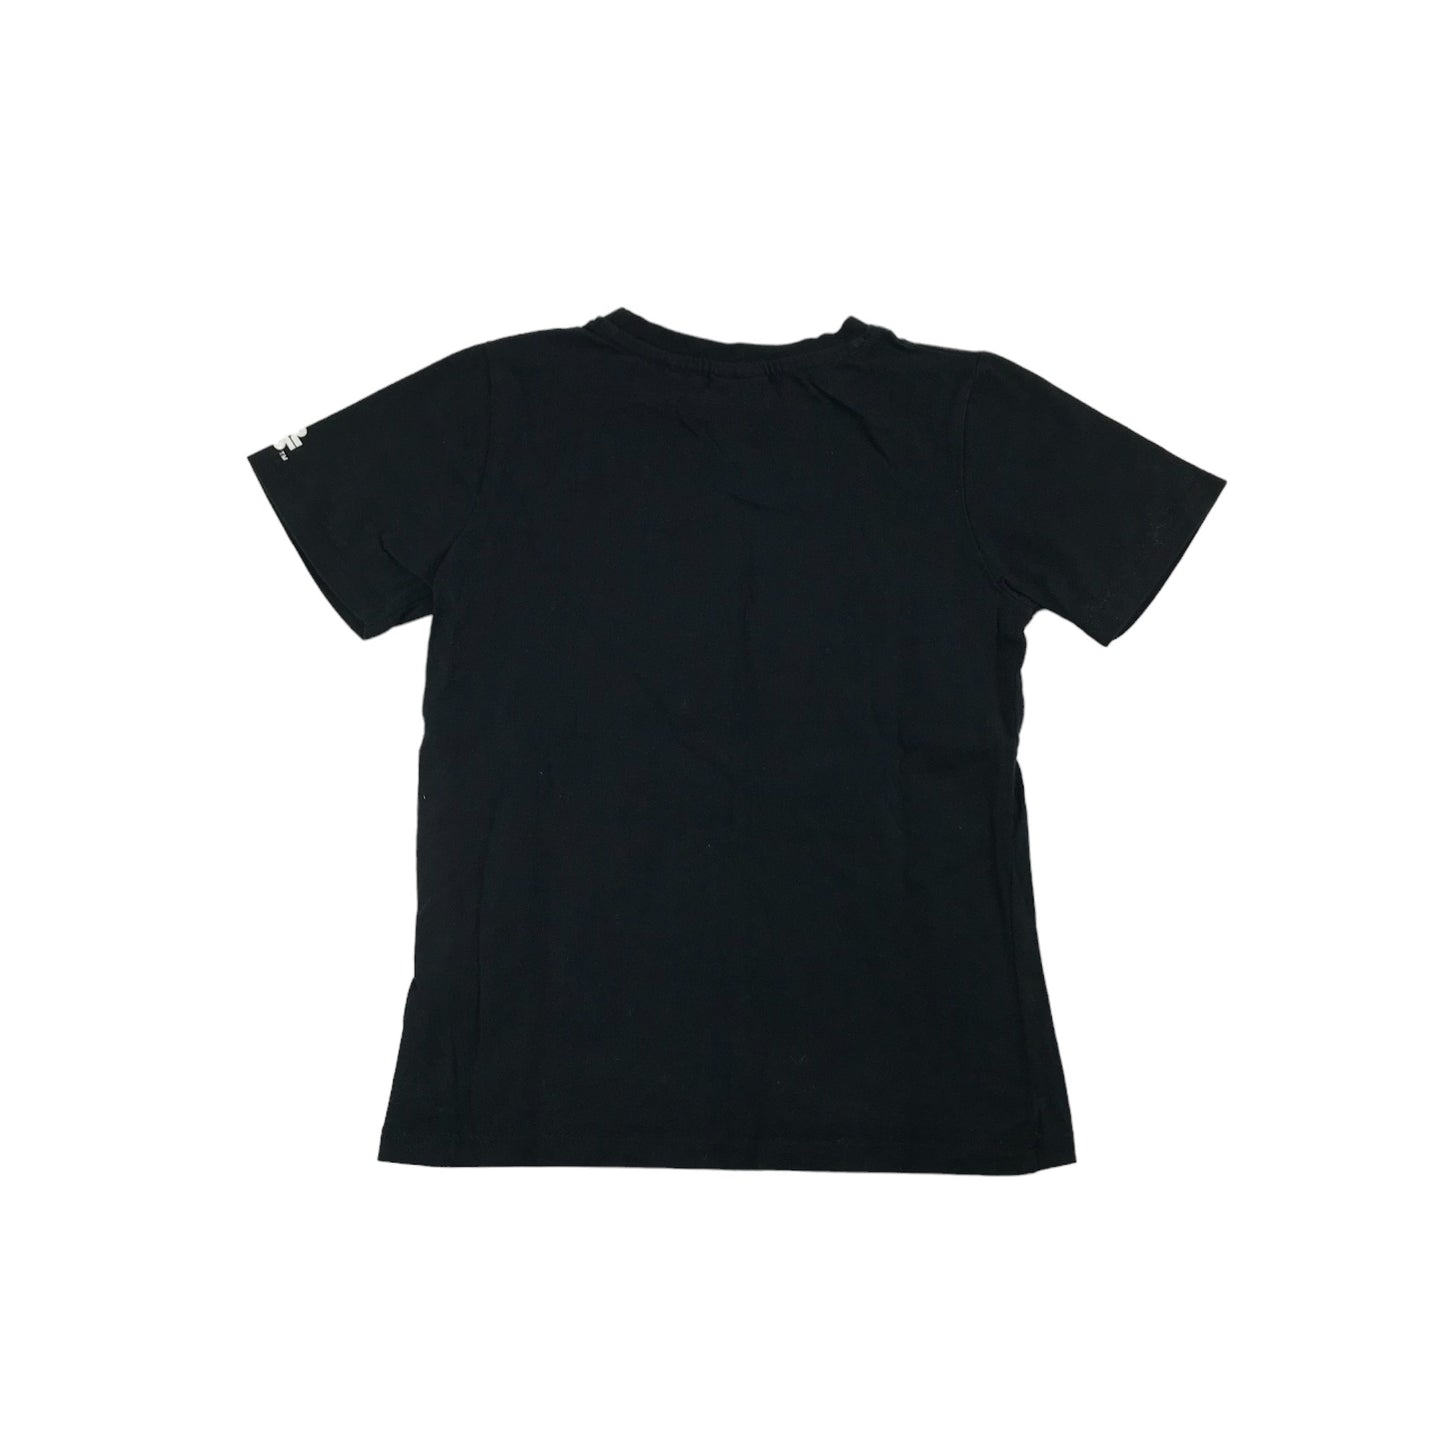 M&Co T-Shirt Age 7 Black Short Sleeve Star Wars Storm Trooper Graphic